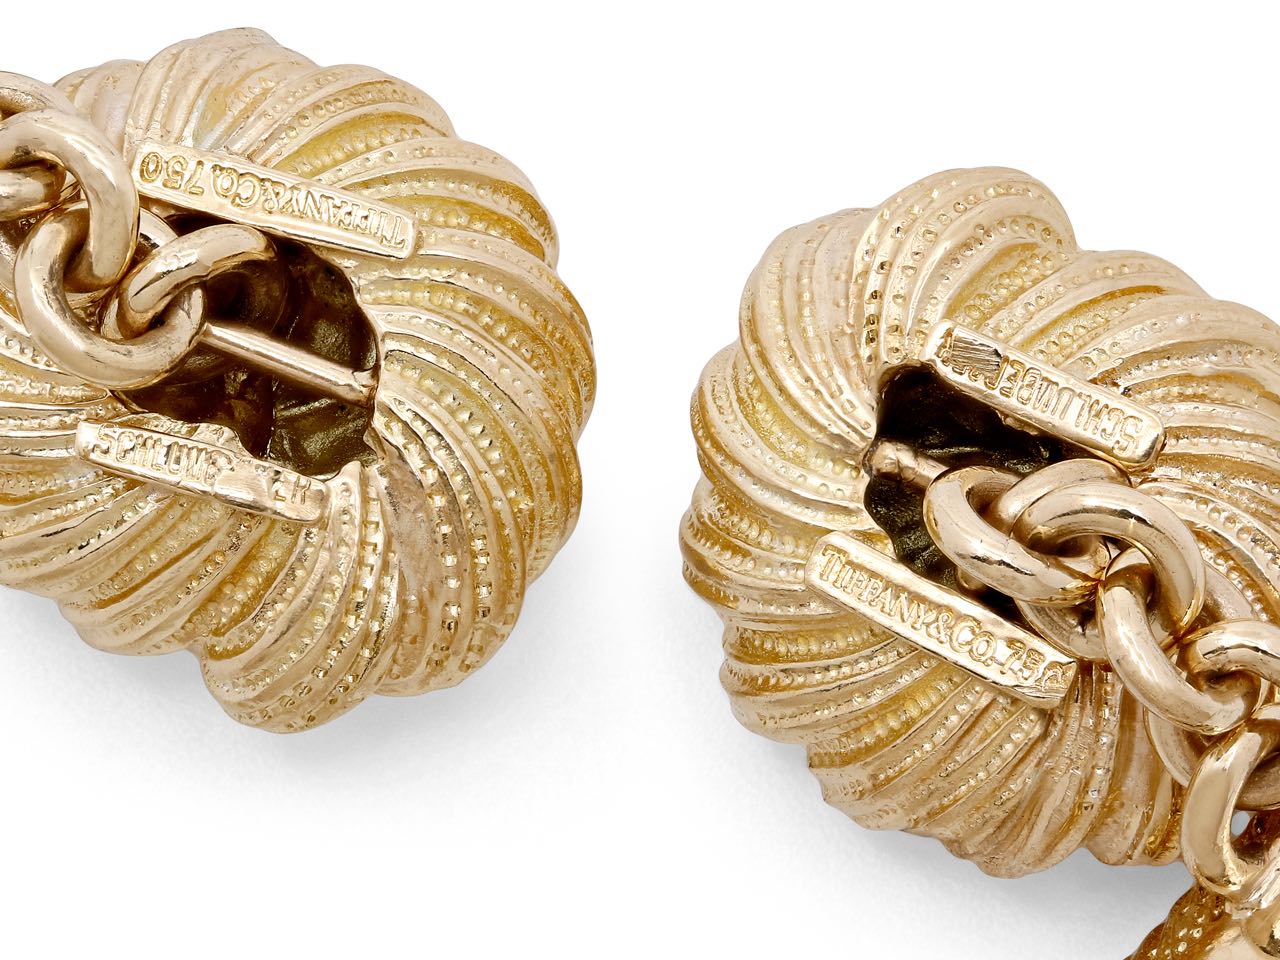 Tiffany & Co. Schlumberger Shell Cufflinks in 18K Gold